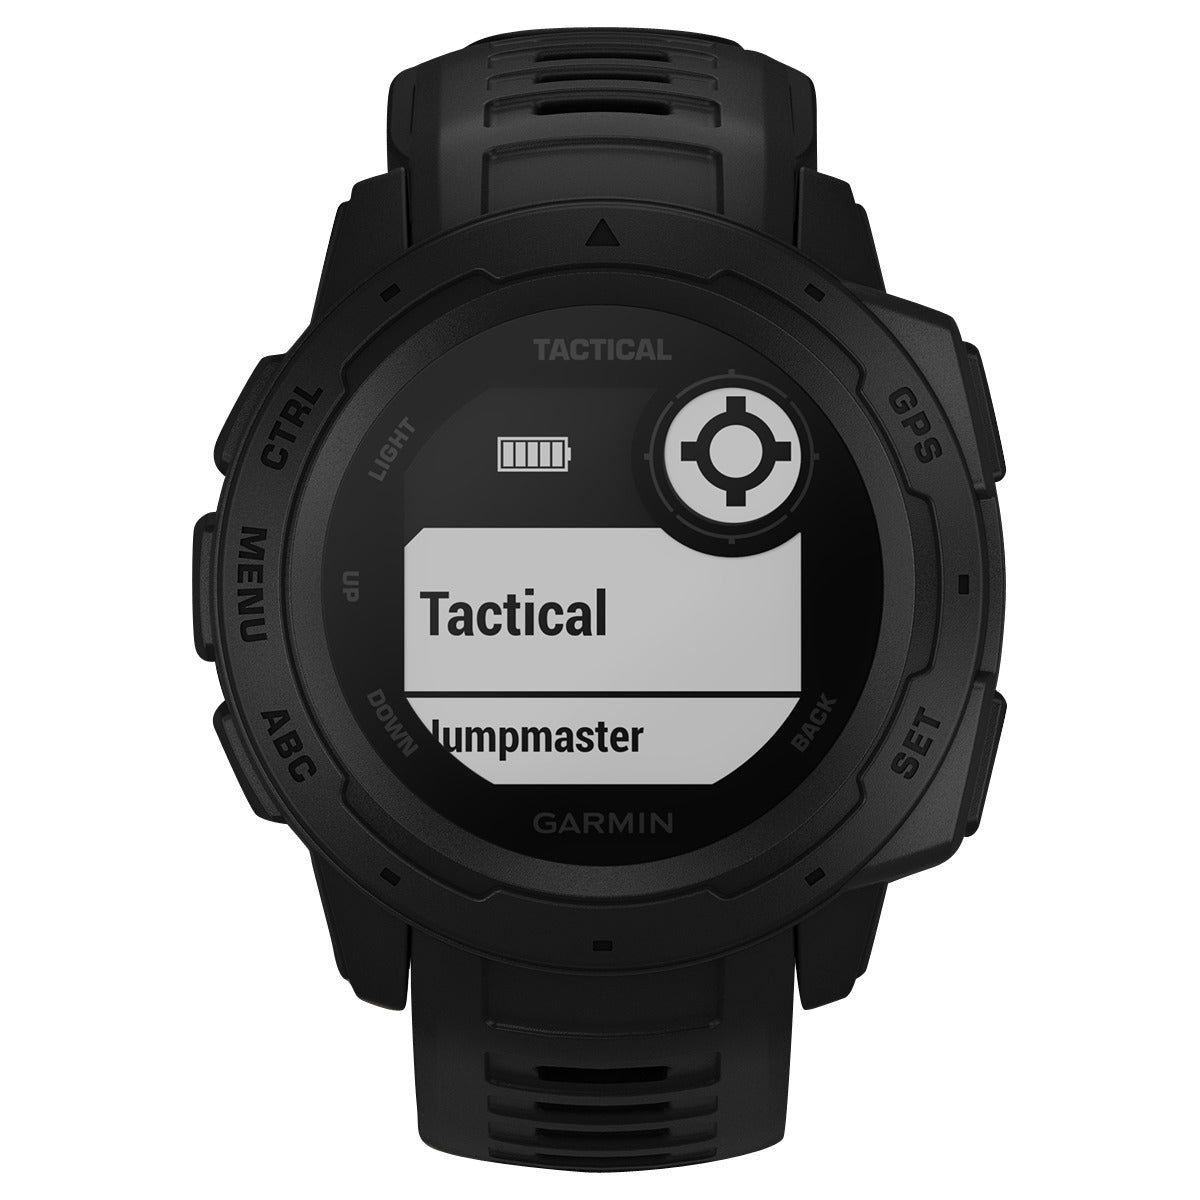 Garmin Instinct Tactical Watch in Garmin Instinct Tactical Watch by Garmin | Gear - goHUNT Shop by GOHUNT | Garmin - GOHUNT Shop